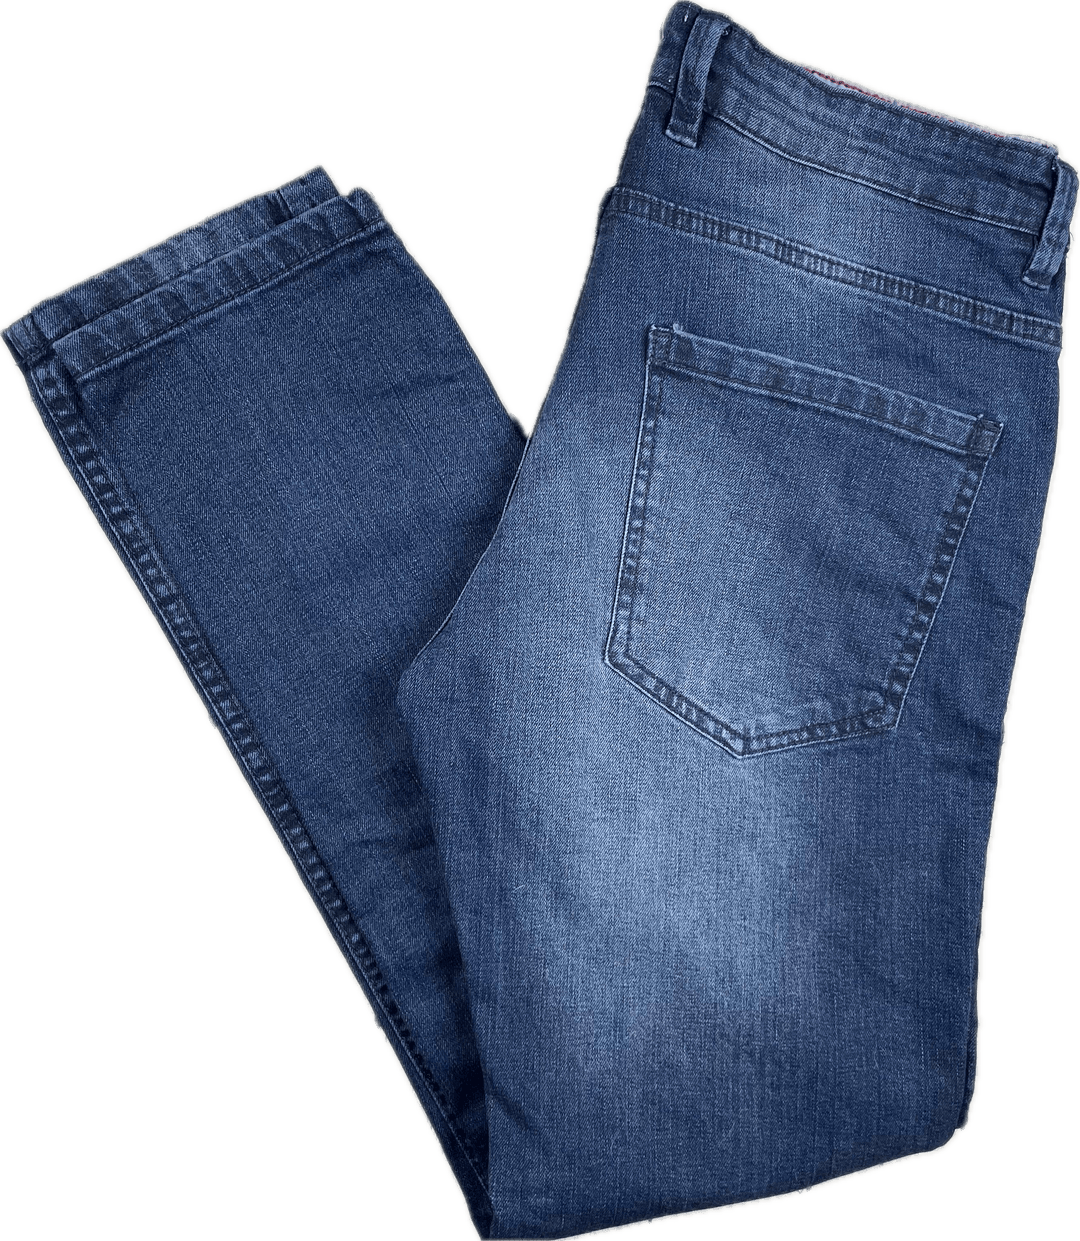 Piazza Italiaman Distressed Slim Fit Jeans - Size 46 It or 30" - Jean Pool